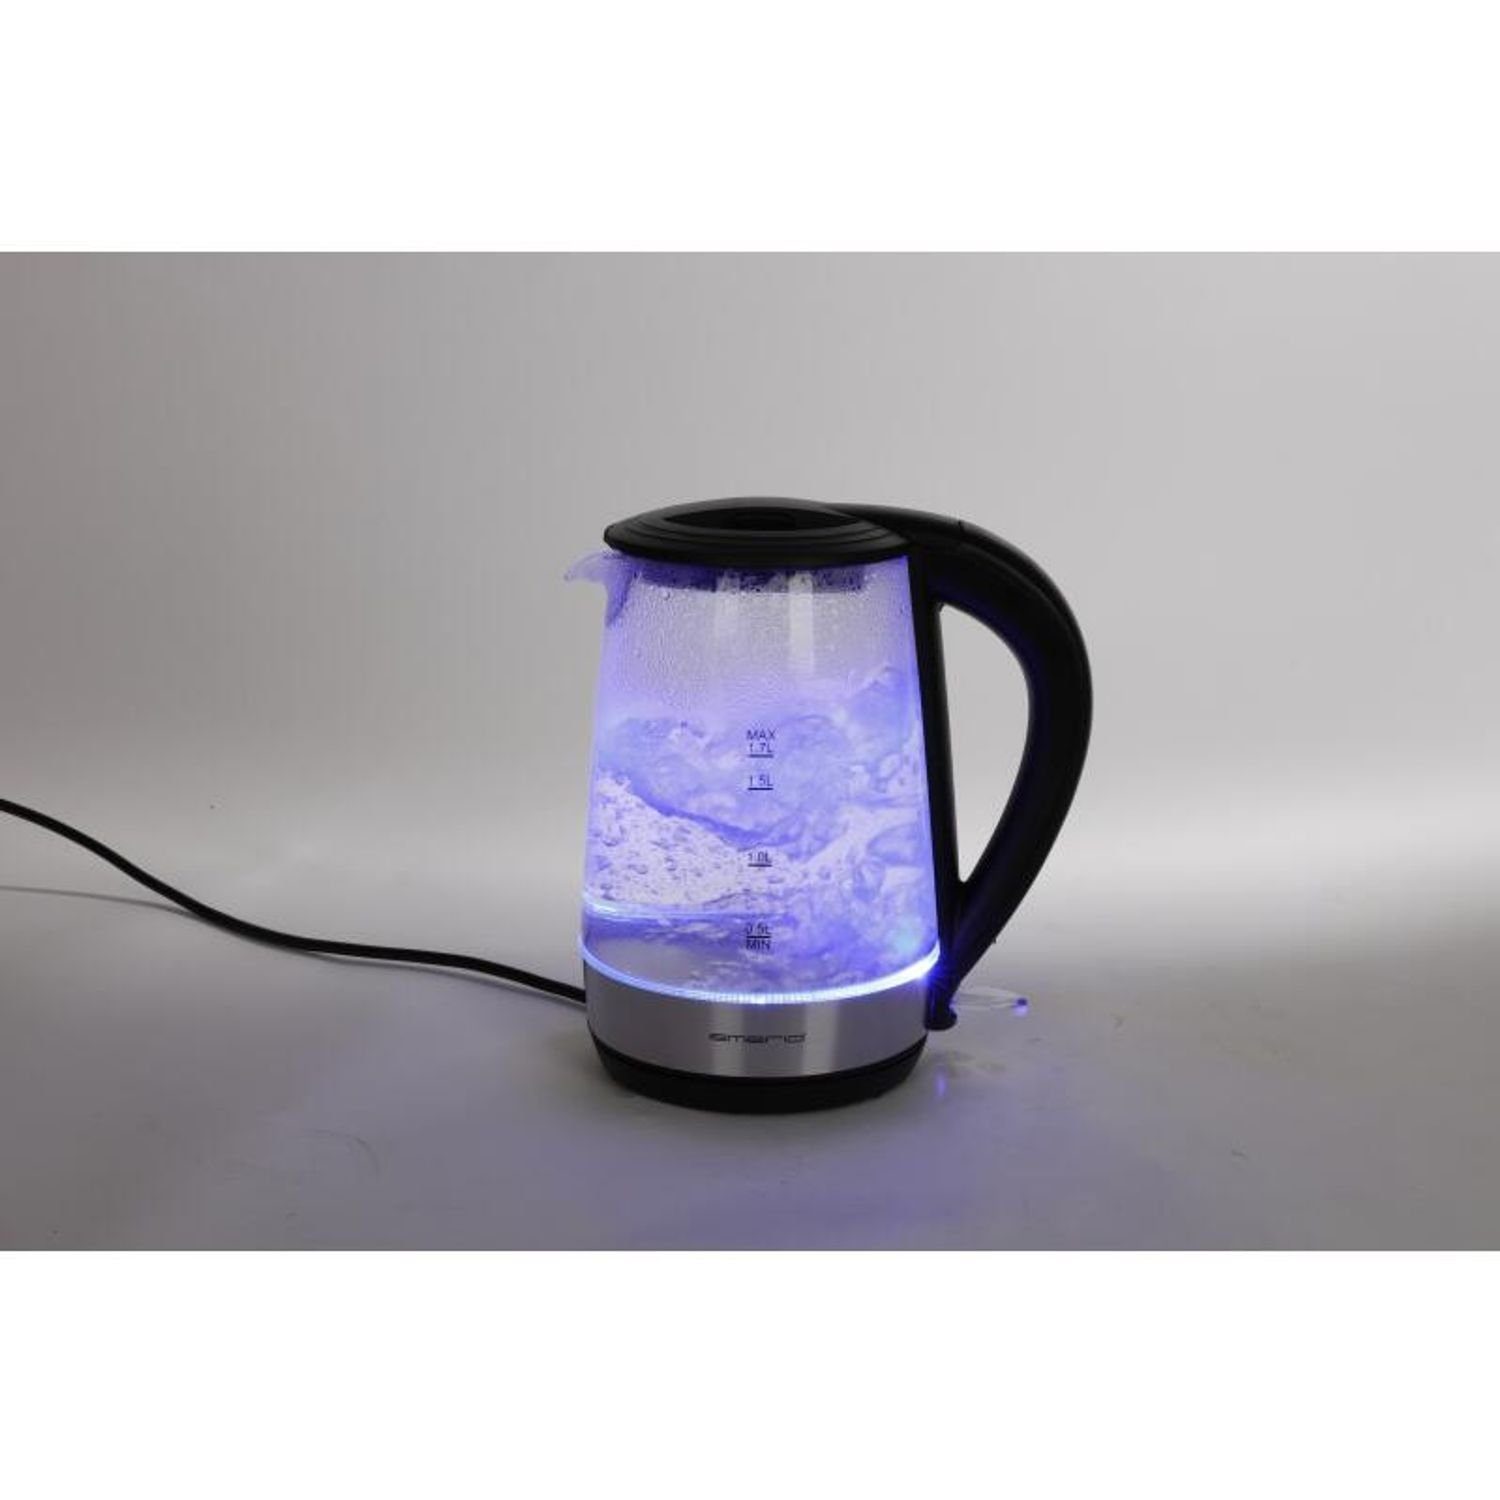 Glas Kettle 1,7L Emerio LED Wasserkocher Kü Erwärmen Kabellos Tee Wasserkocher Beleuchtung